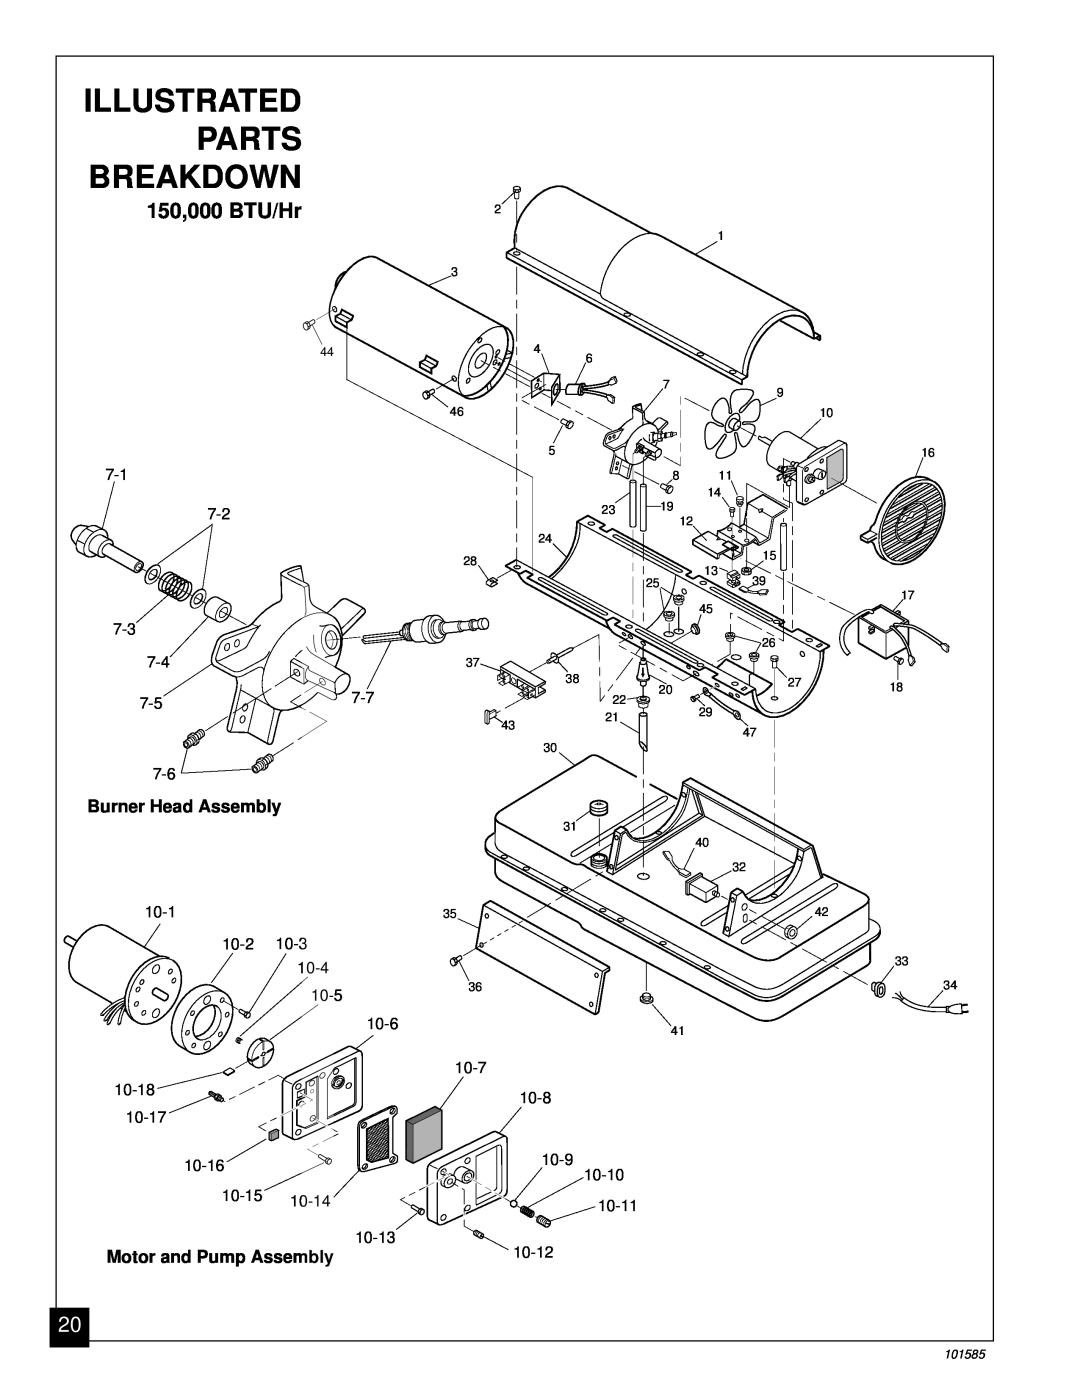 Master Lock 100000 BTU/Hr Illustrated, 150,000 BTU/Hr, Parts, Breakdown, Burner Head Assembly, Motor and Pump Assembly 